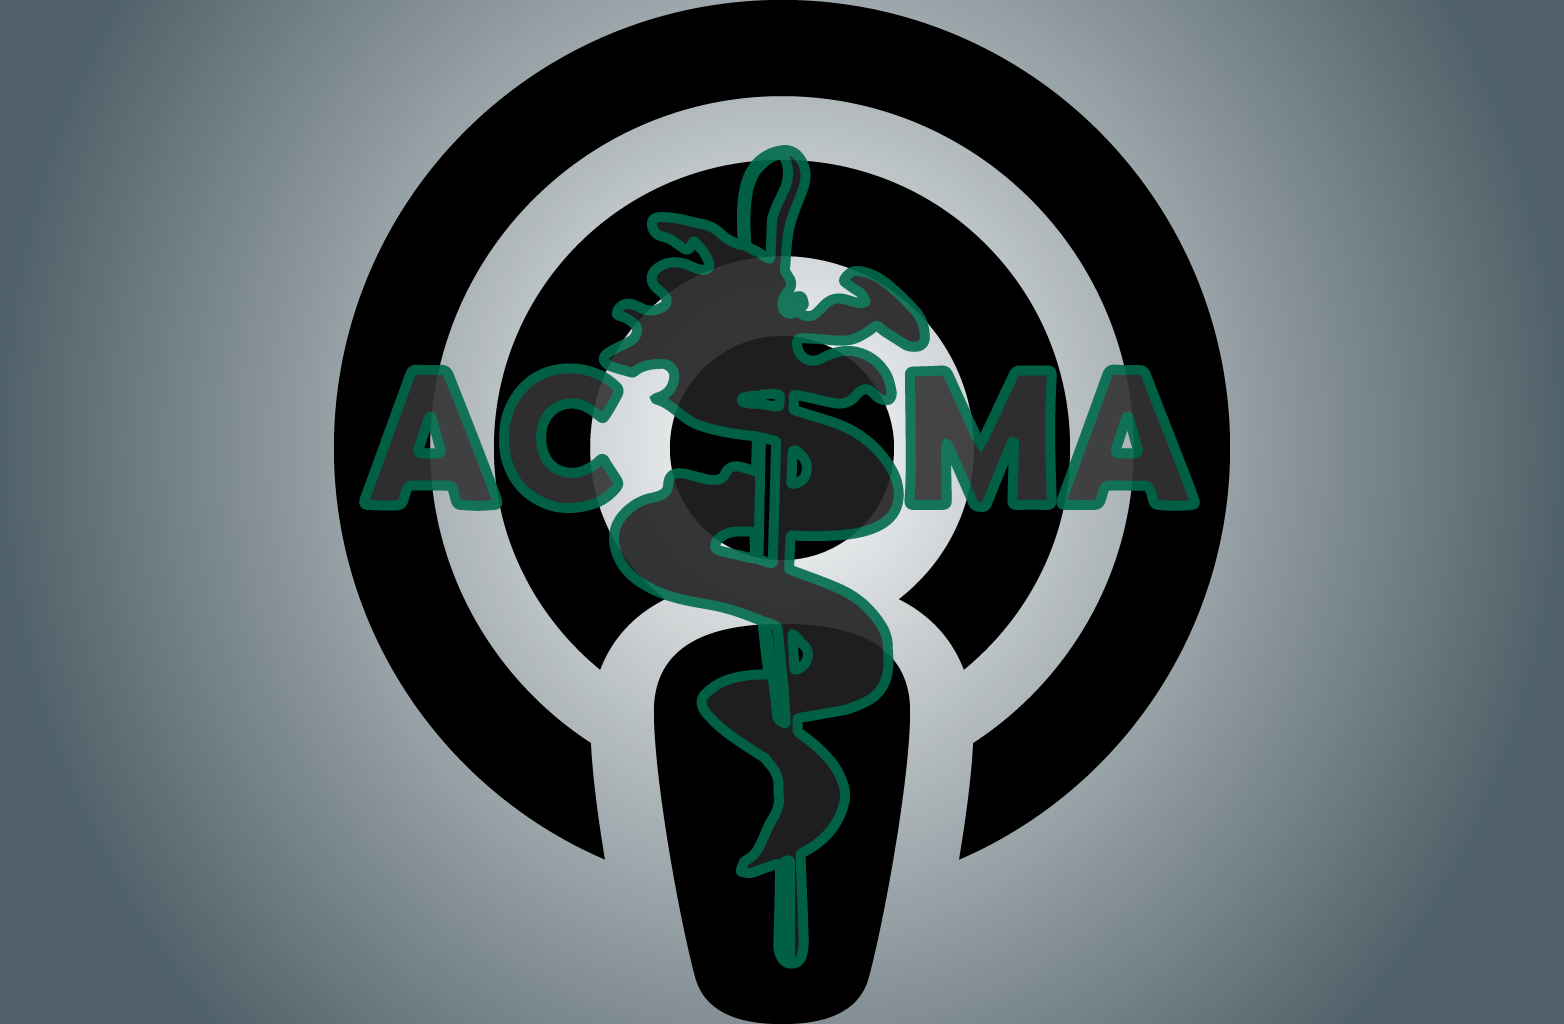 ACMA logo overlaid over podcast icon